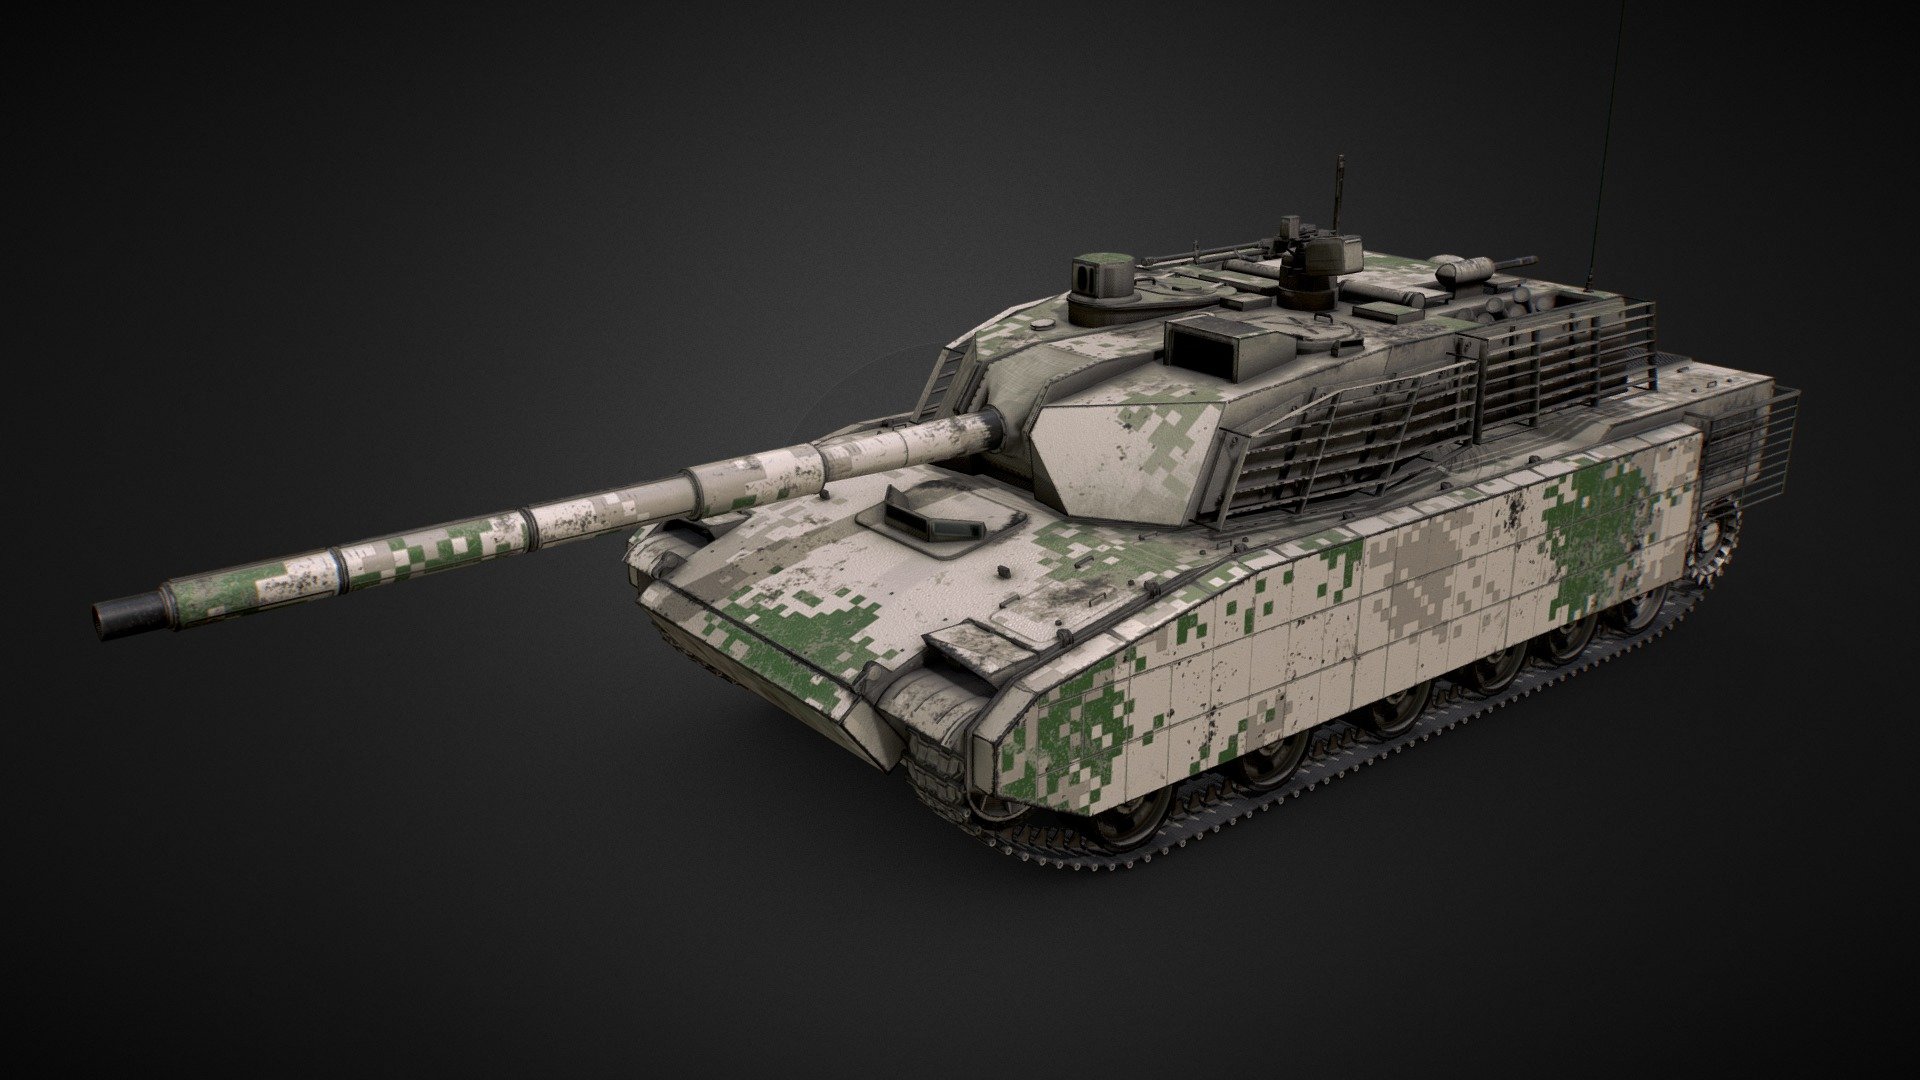 A VT-5 light tank. Made as an exercise for modding in World of Tanks 3d model